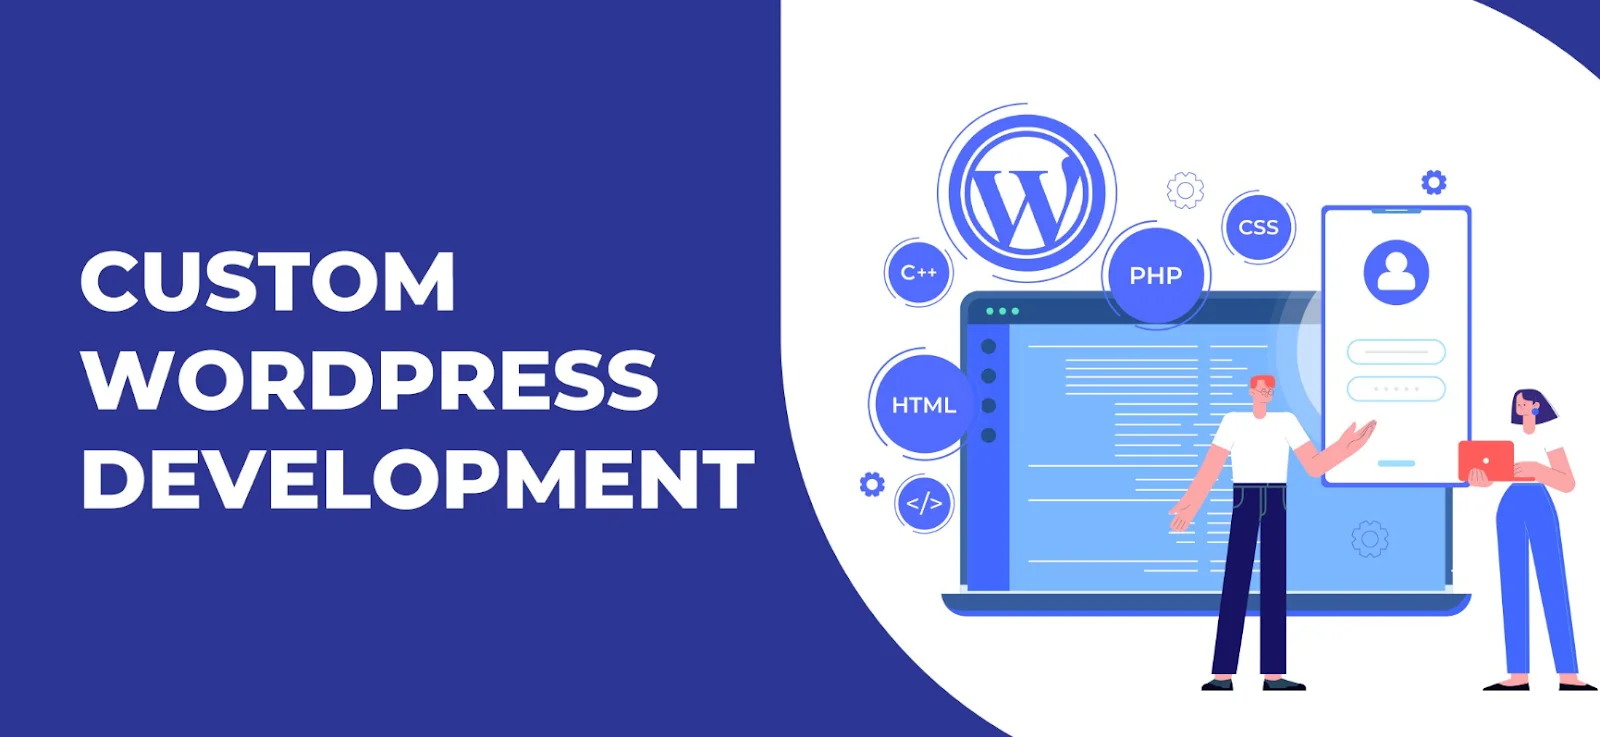 What Exactly Is Custom WordPress Development?